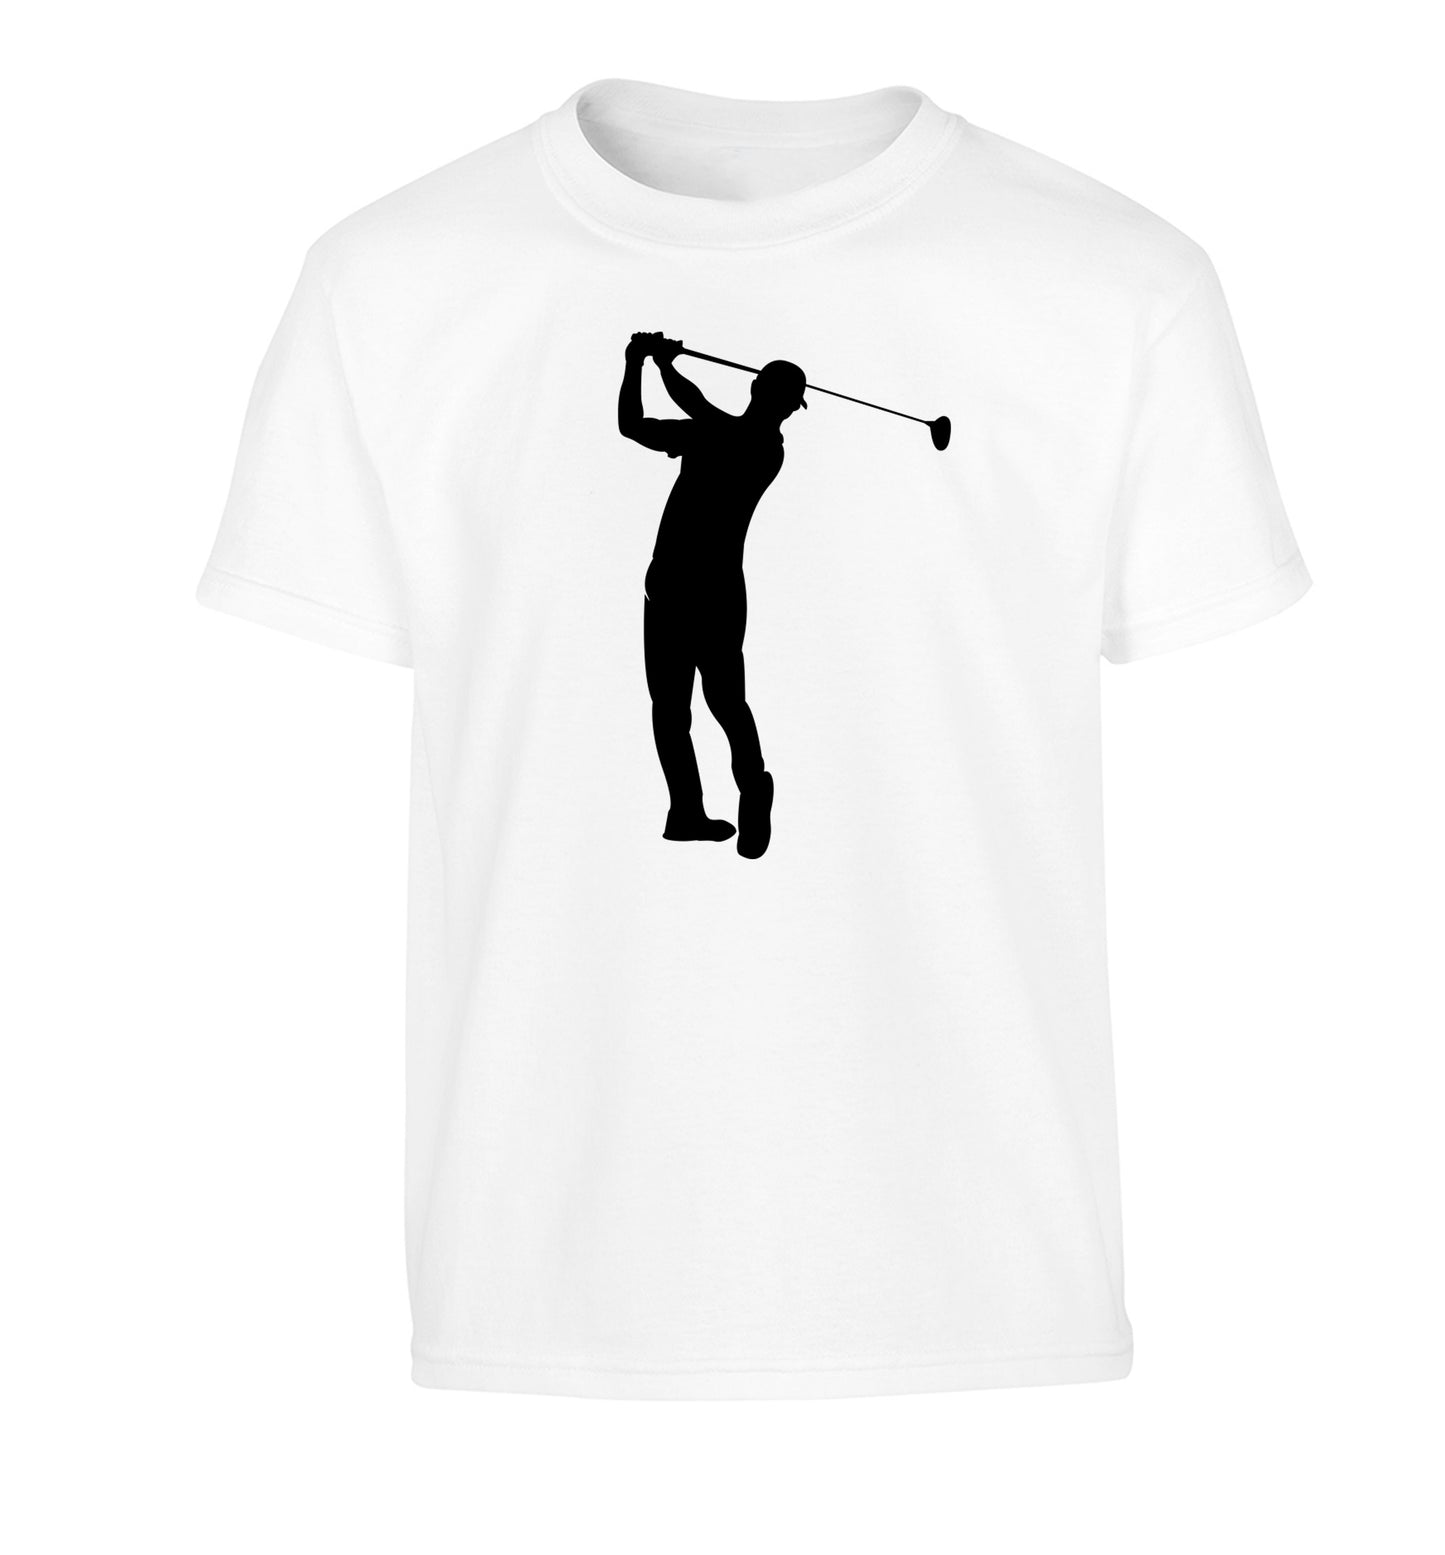 Golfer Illustration Children's white Tshirt 12-13 Years